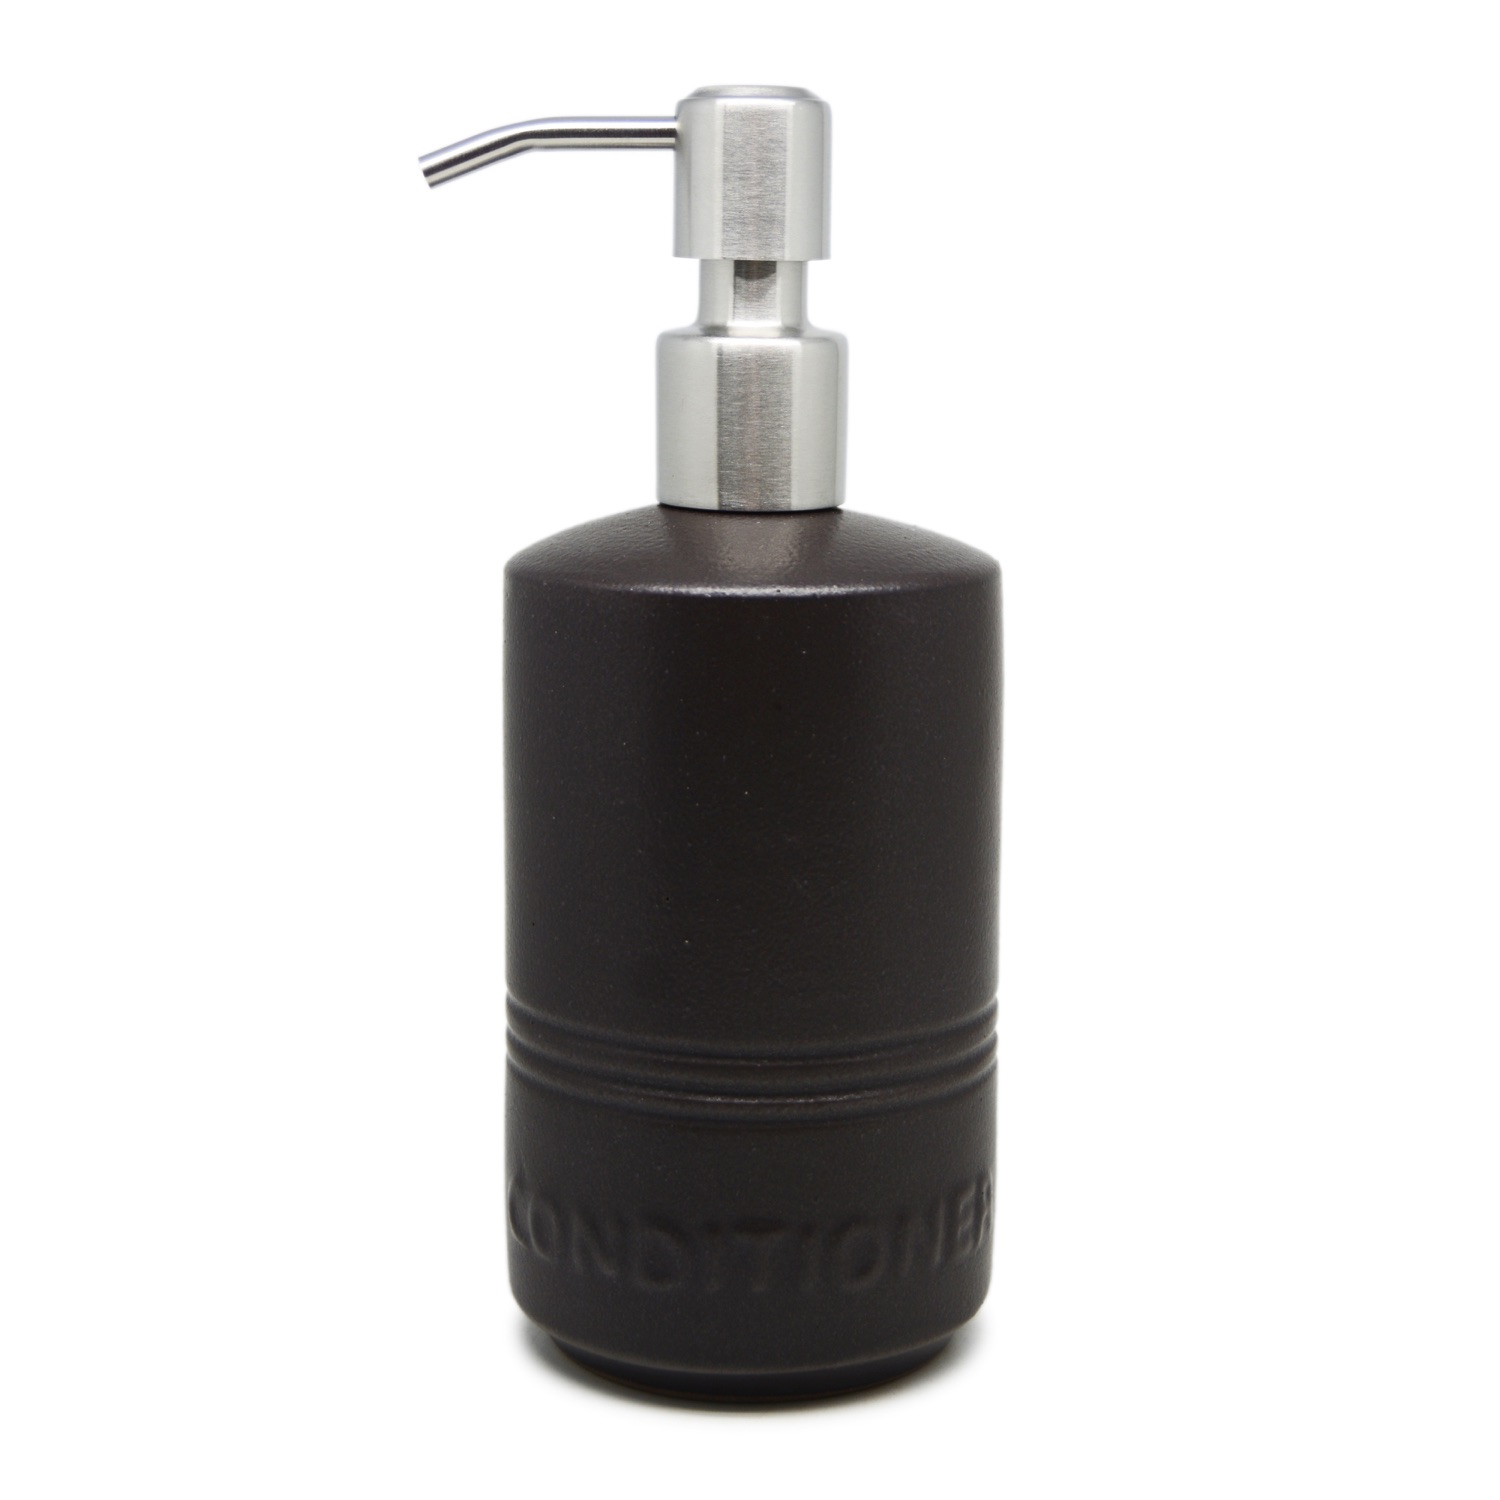 Pillar Liquid Dispenser - Conditioner - Stainless Steel Pump